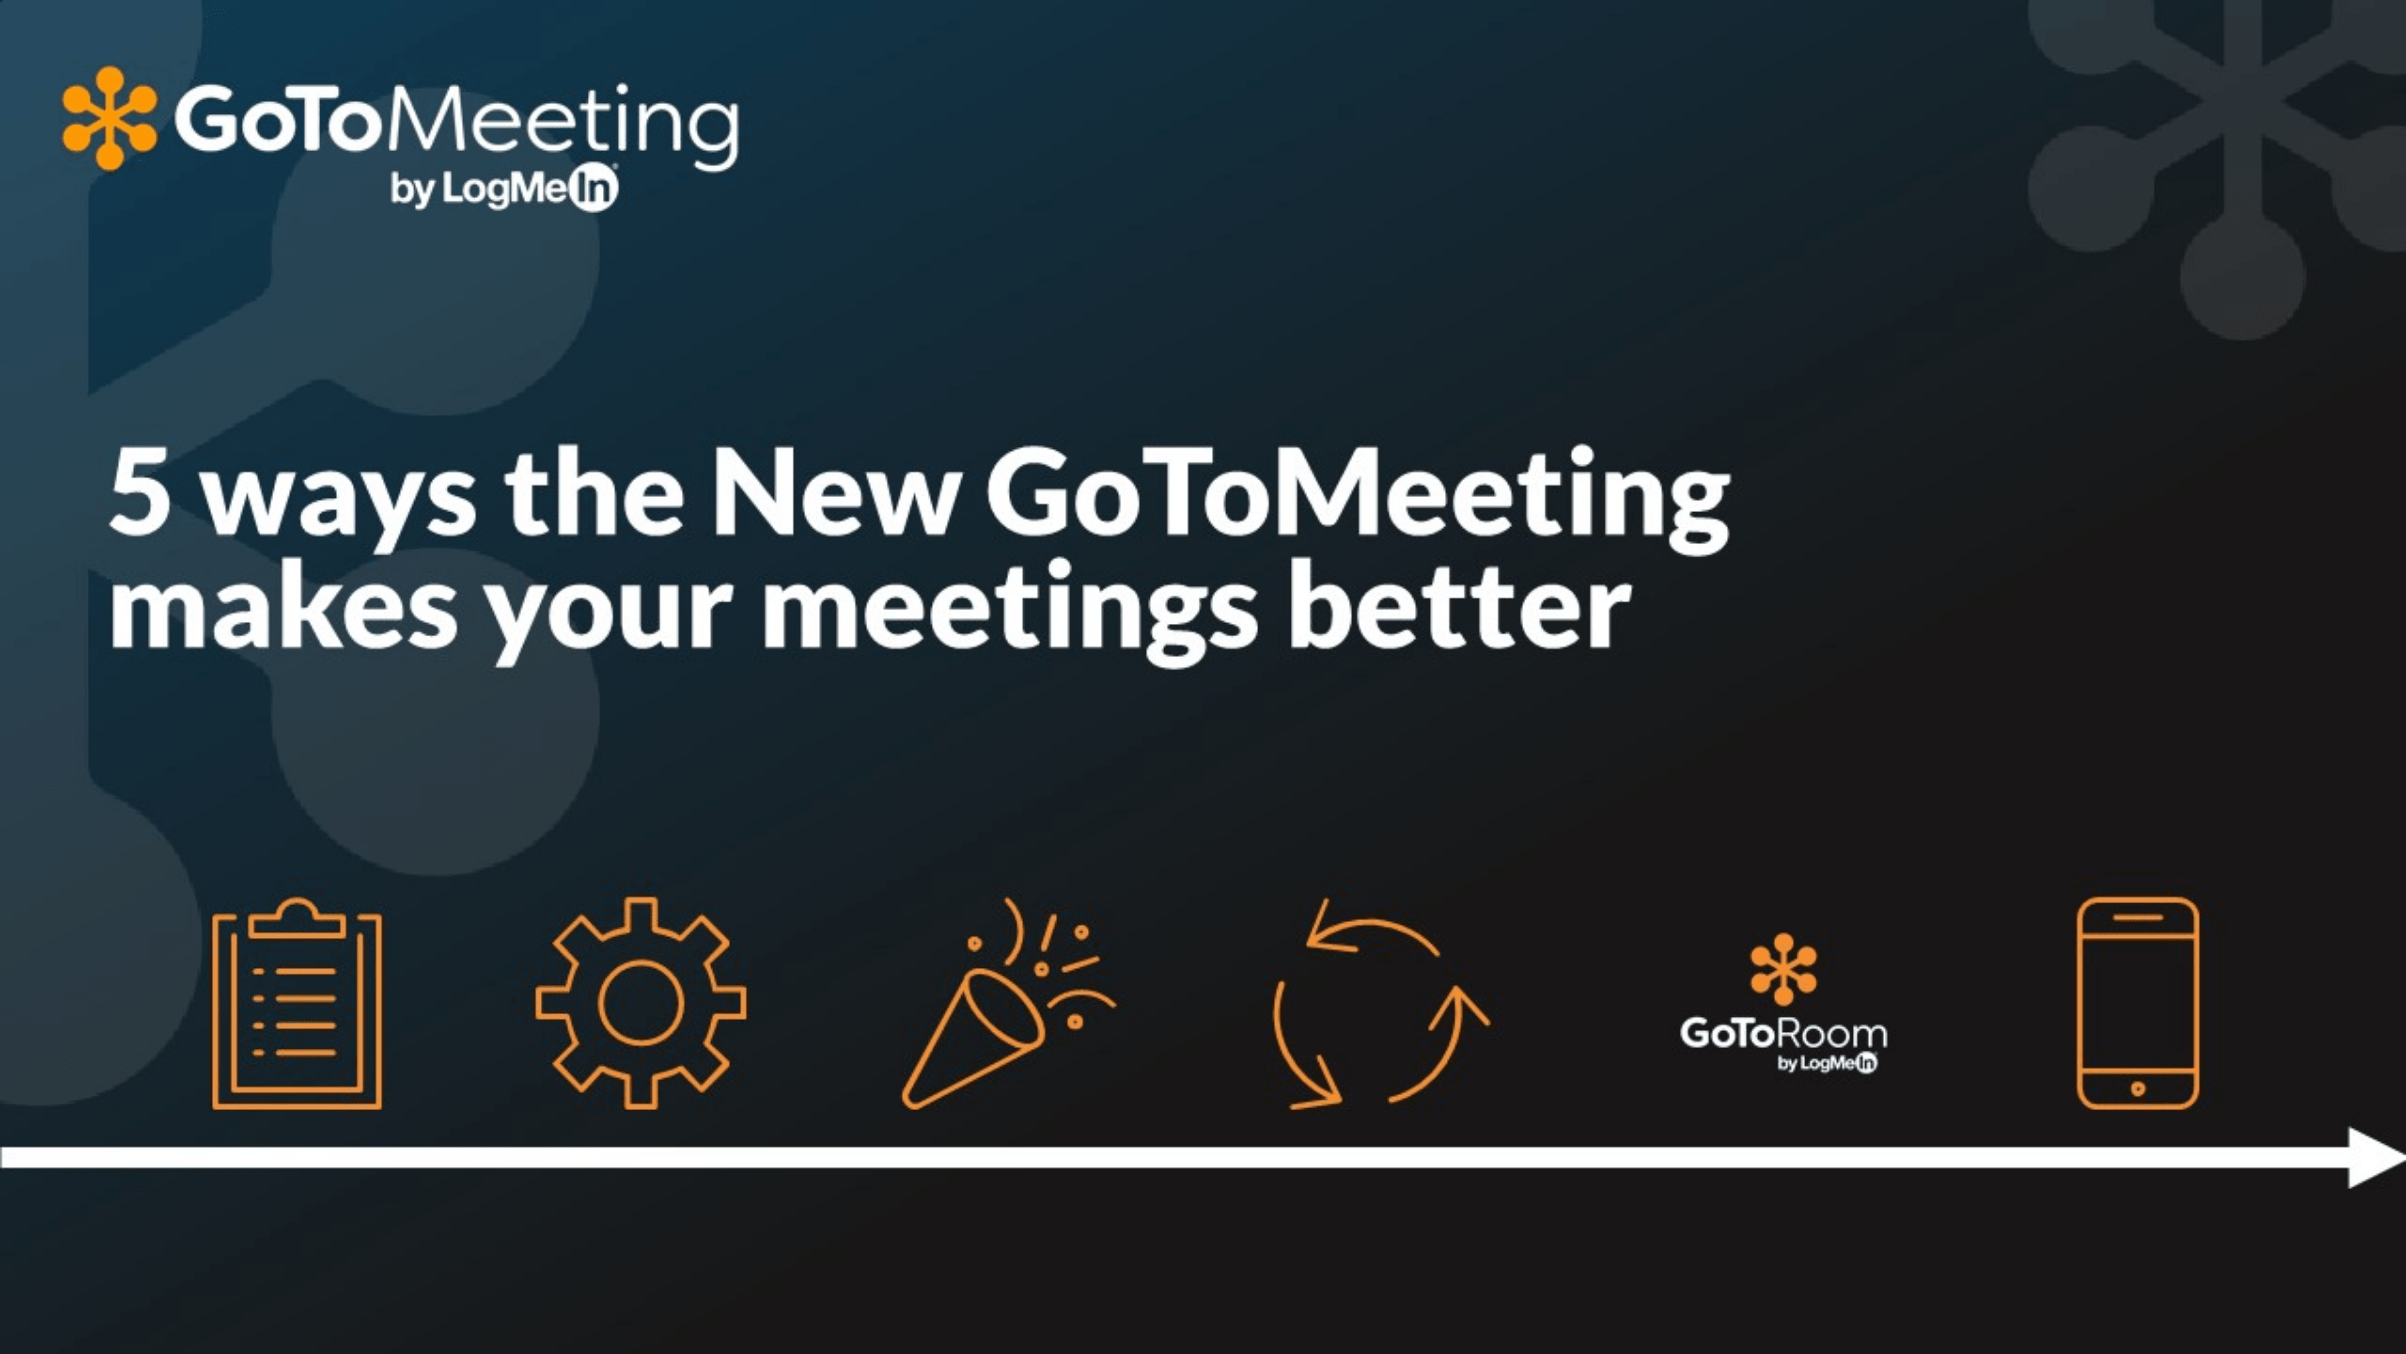 Screenshot 2020 11 26 GTM UKI jpg JPEG Image 1280 × 720 pixels — Scaled 94 - 5 ways the New GoToMeeting makes your meetings better 